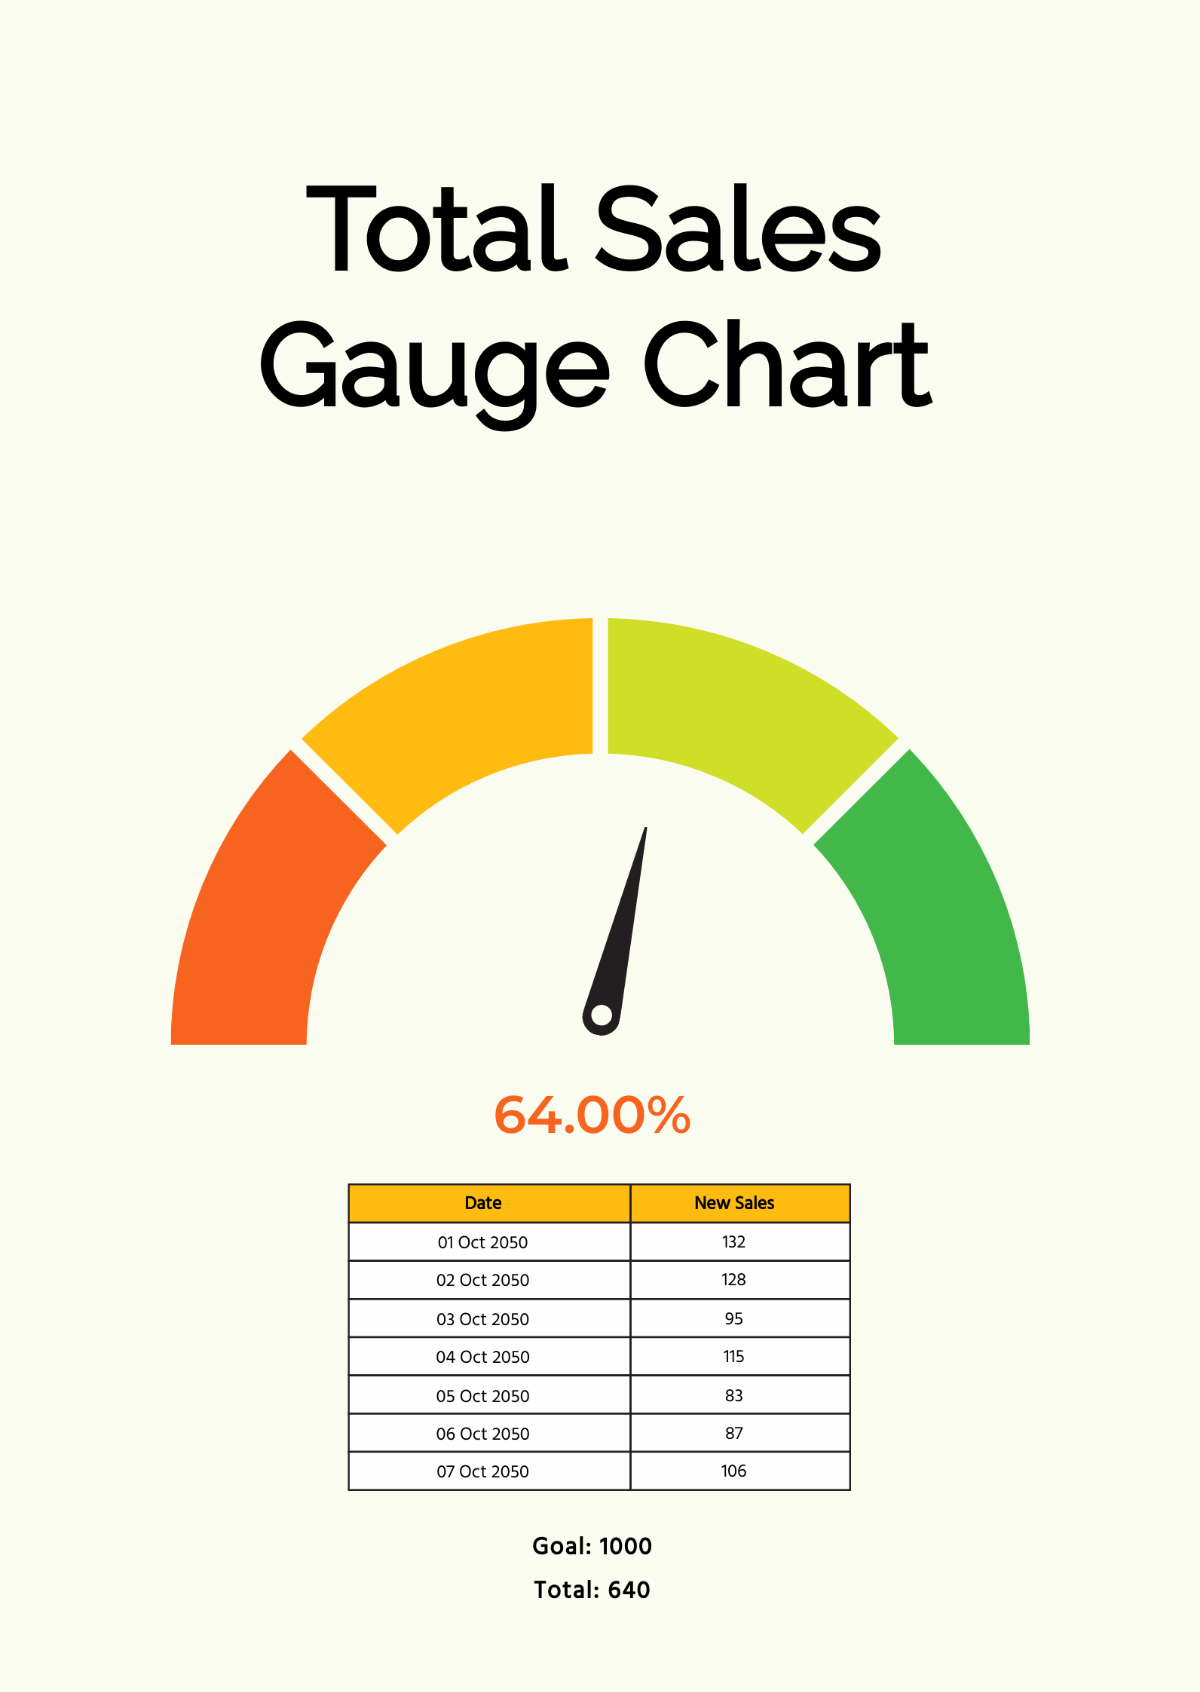 Total Sales Gauge Chart